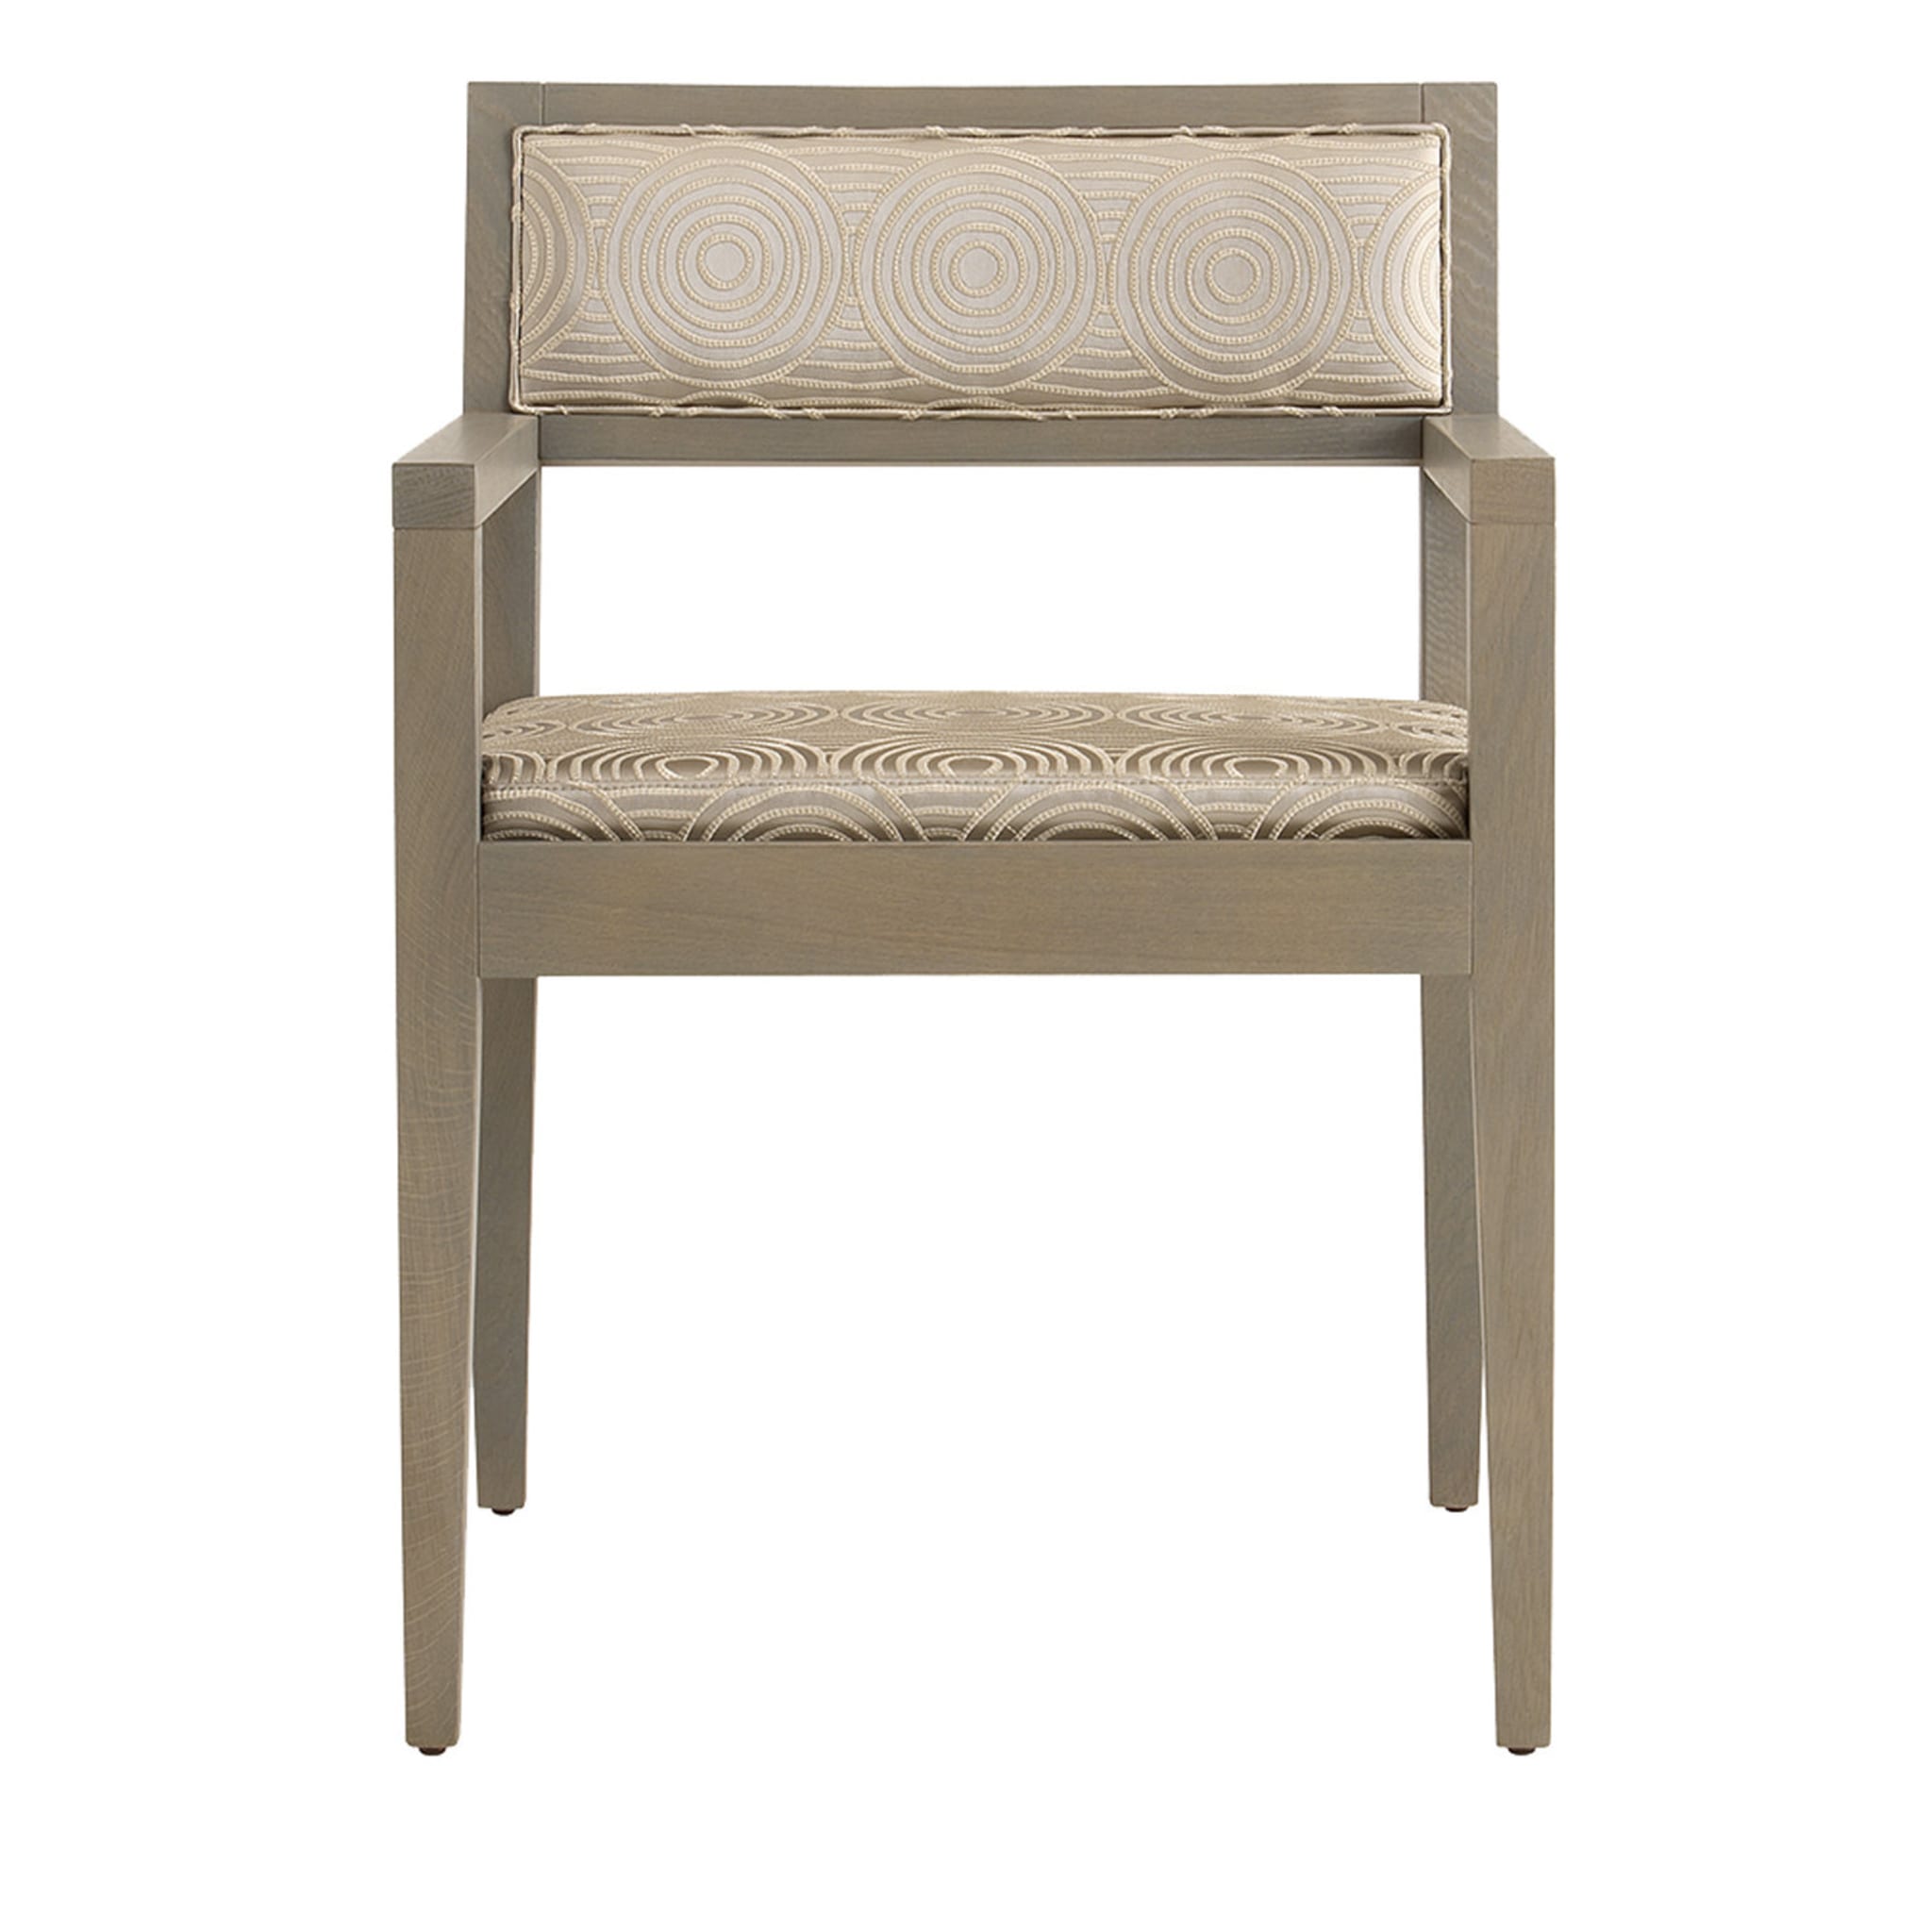 Amalfi Ivory Chair - Main view